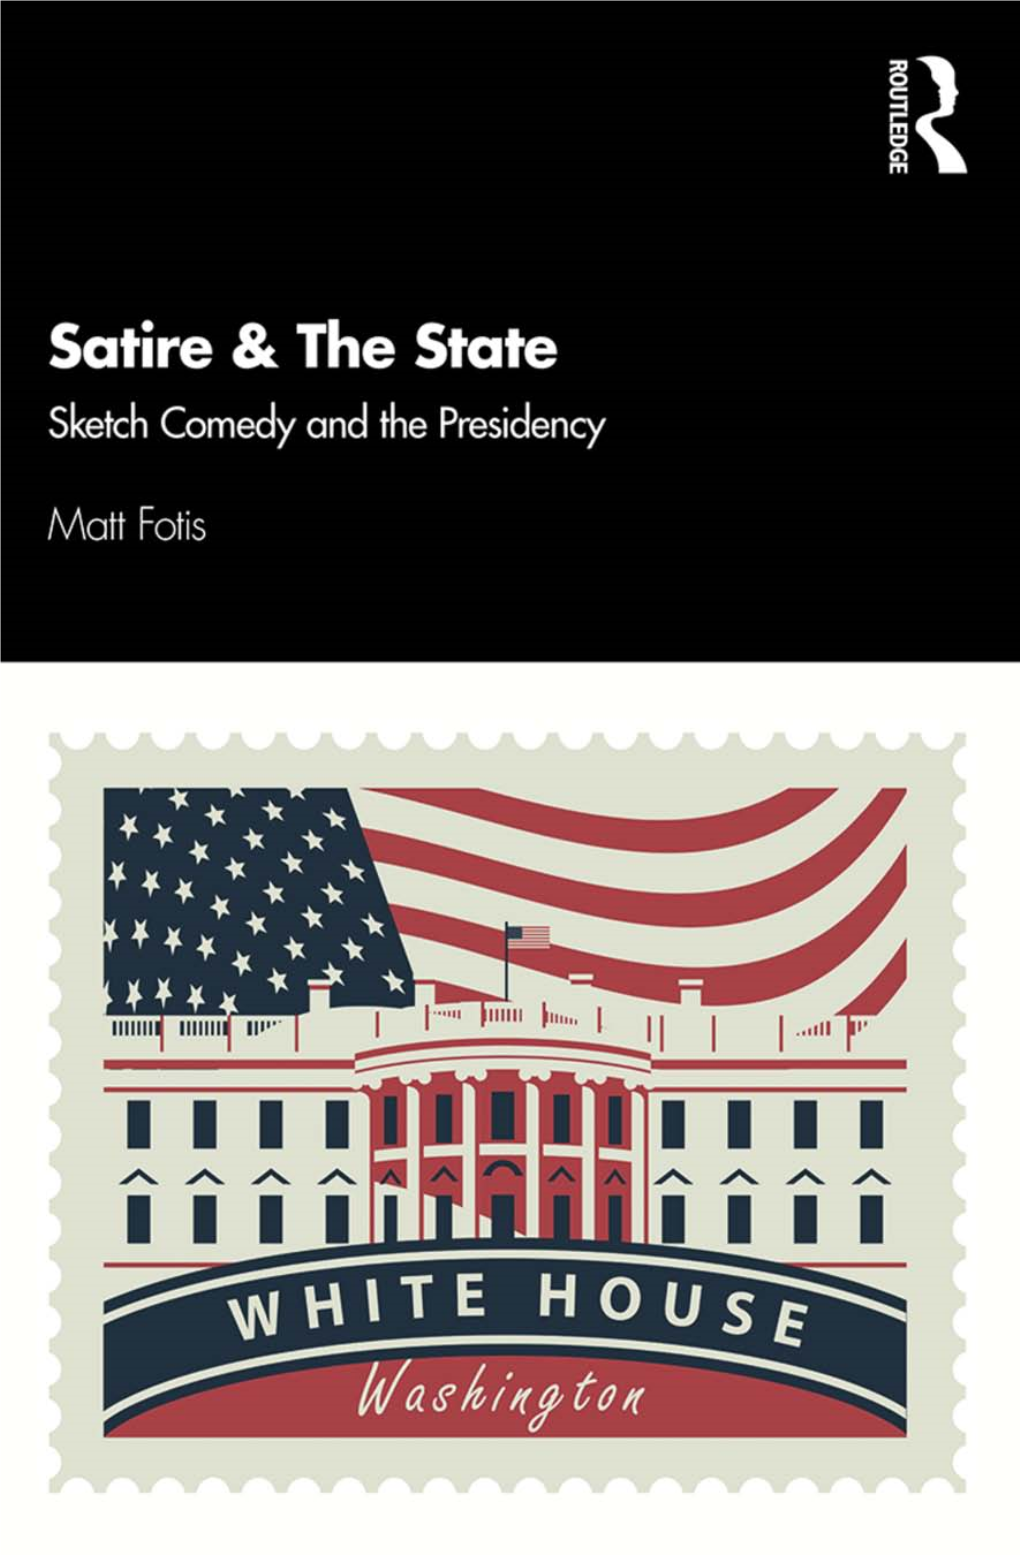 Sketch Comedy and the Presidency